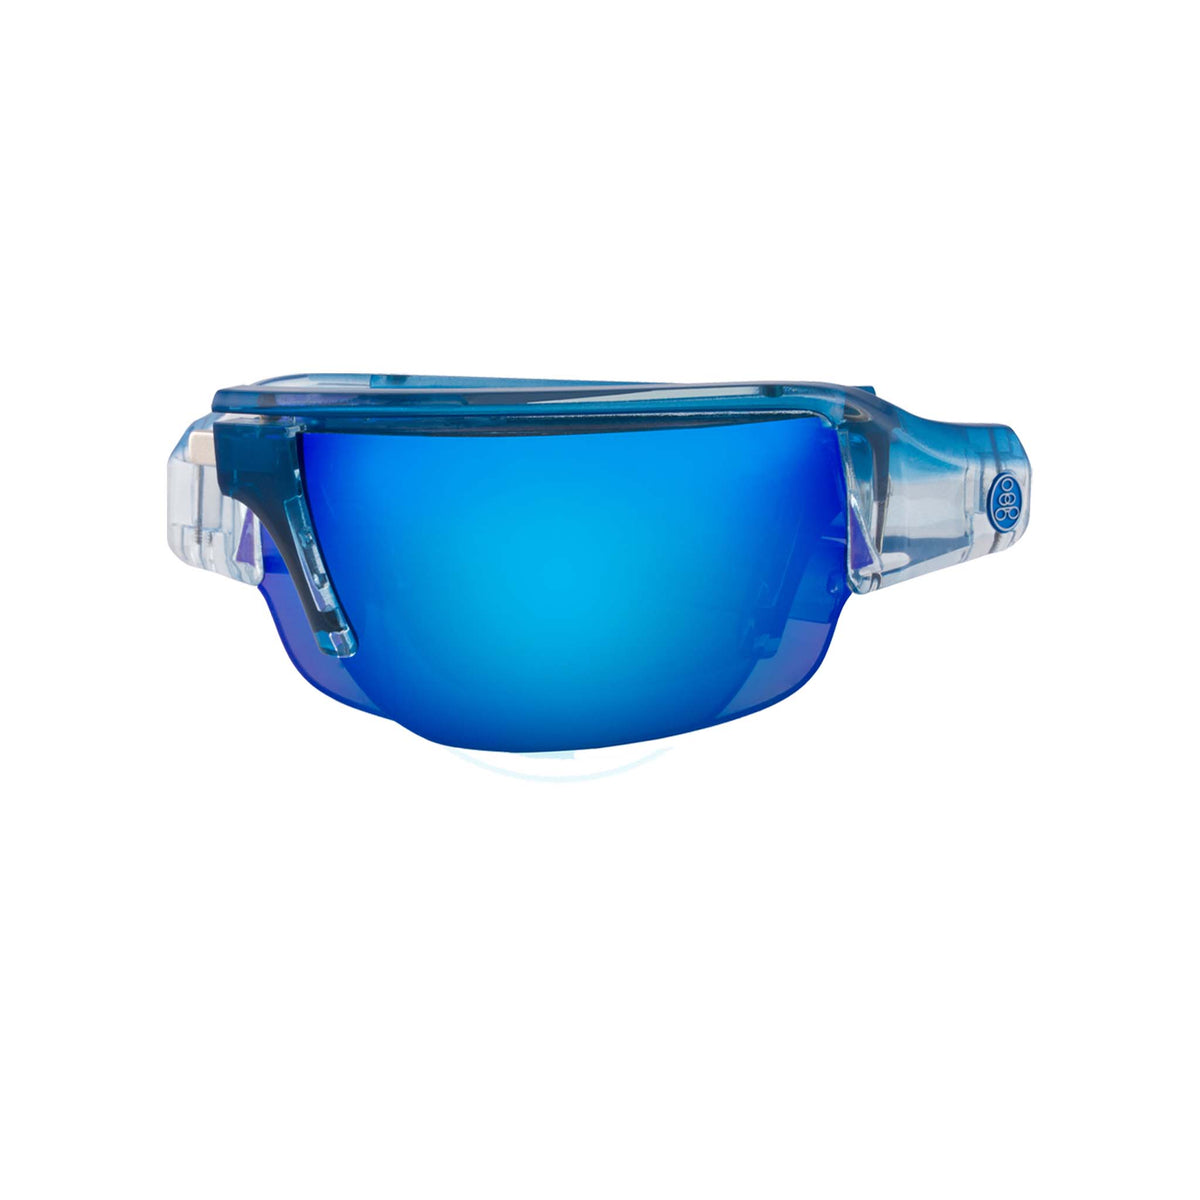 Popticals, Premium Compact Sunglasses, PopGun, 030010-BFUN, Polarized Sunglasses, Gloss Blue/Clear Crystal Frame, Gray Lenses w/Blue Mirror Finish, Compact View